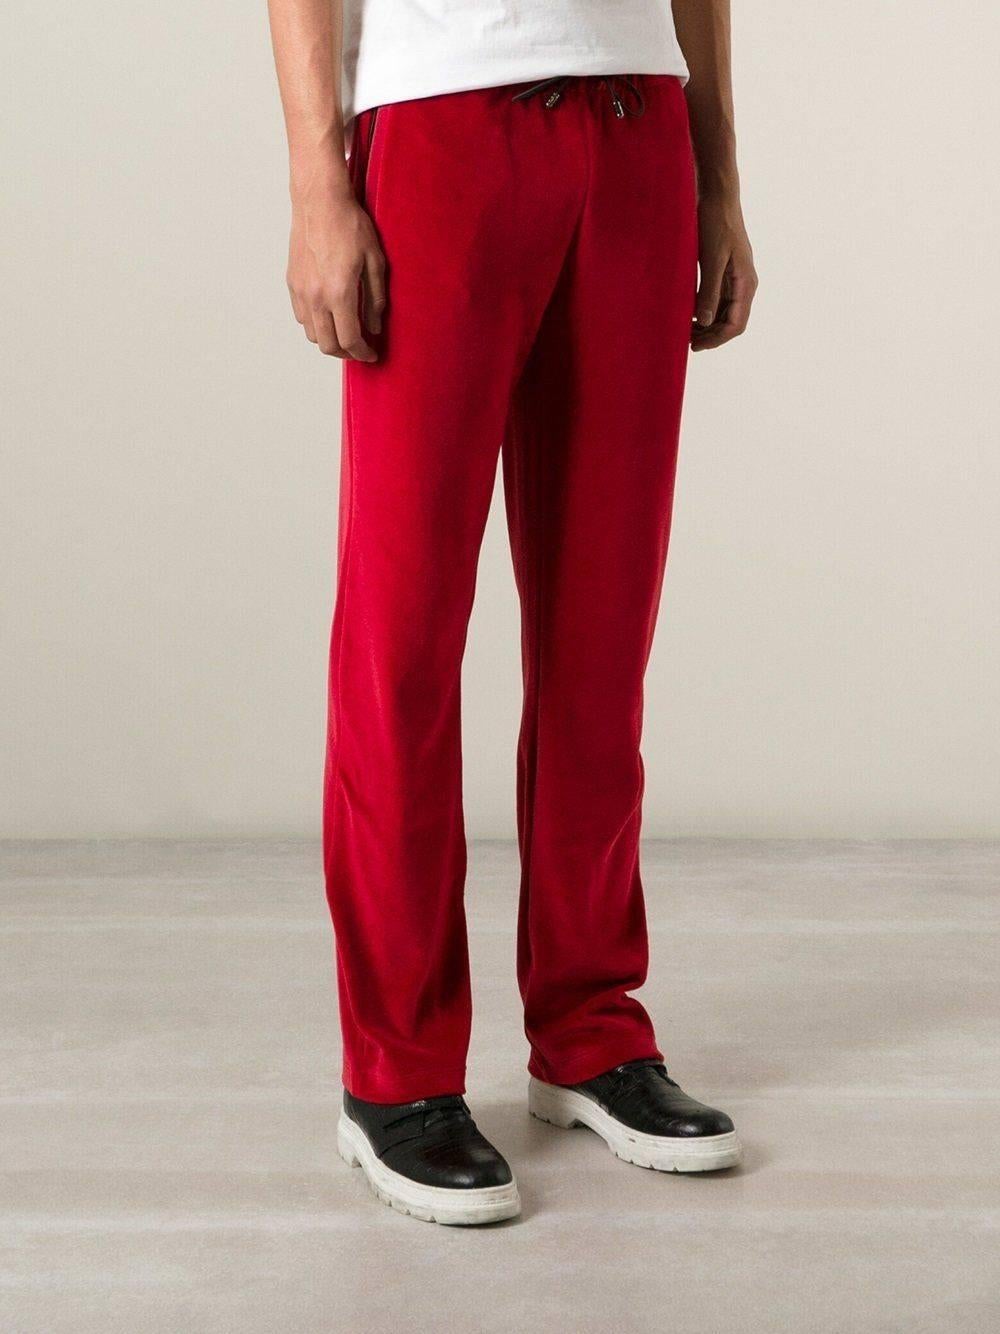 New Versace Medusa Men's Red Velvet Sweatpants Black Leather Trim sizes M, L 1